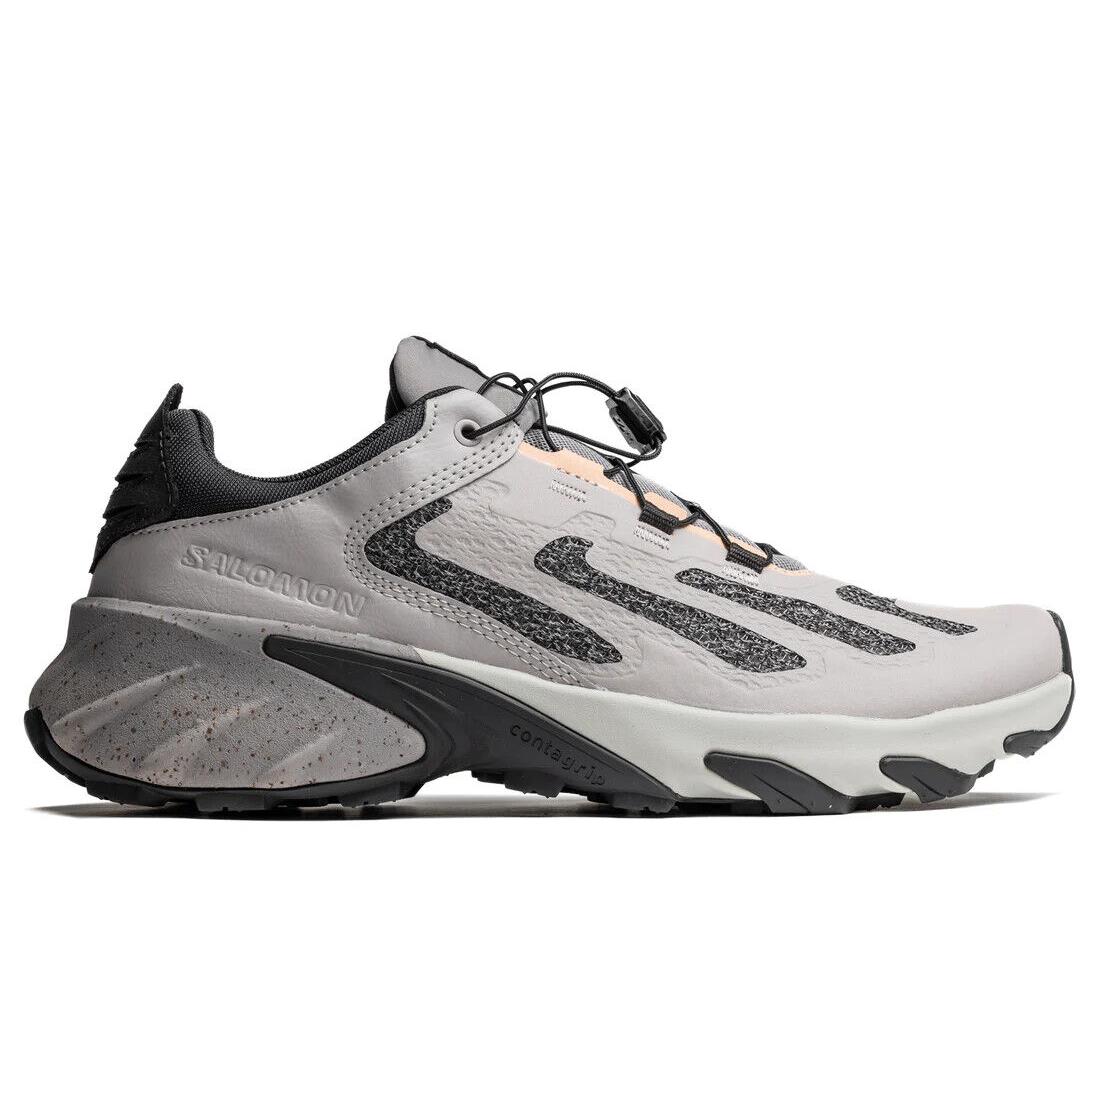 Salomon Speedverse Prg Low Top Sneaker Shoe Calf Leather L47218900 Light Grey - Gray